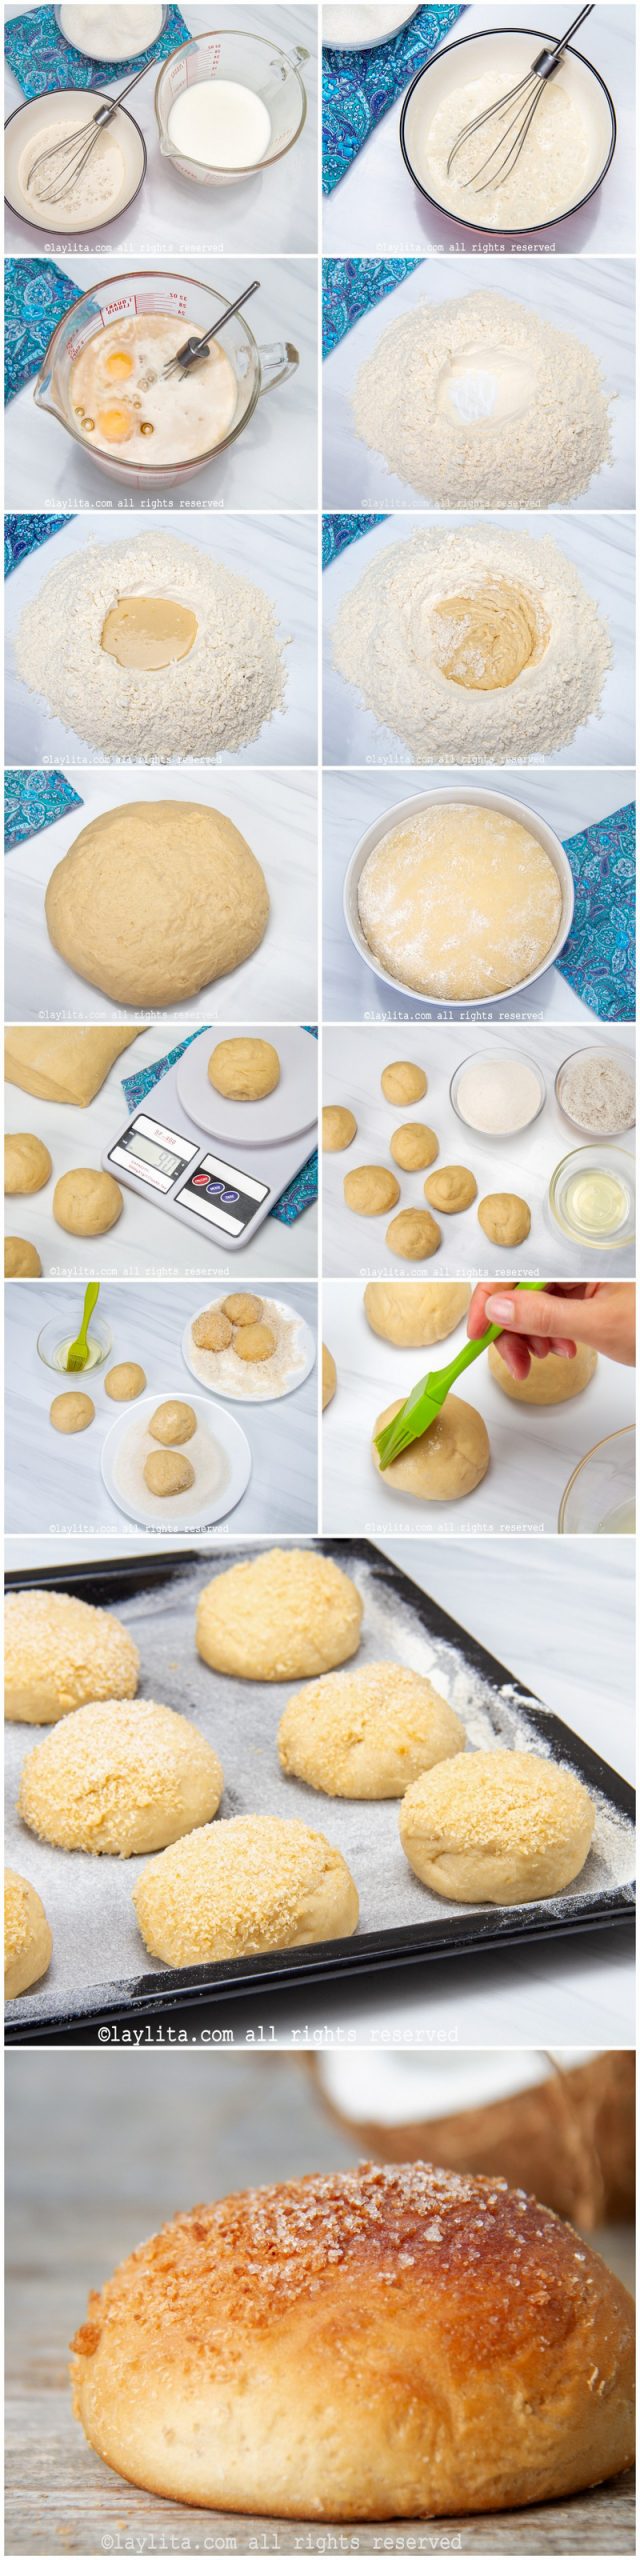 Fotos paso a paso para preparar pan de coco casero